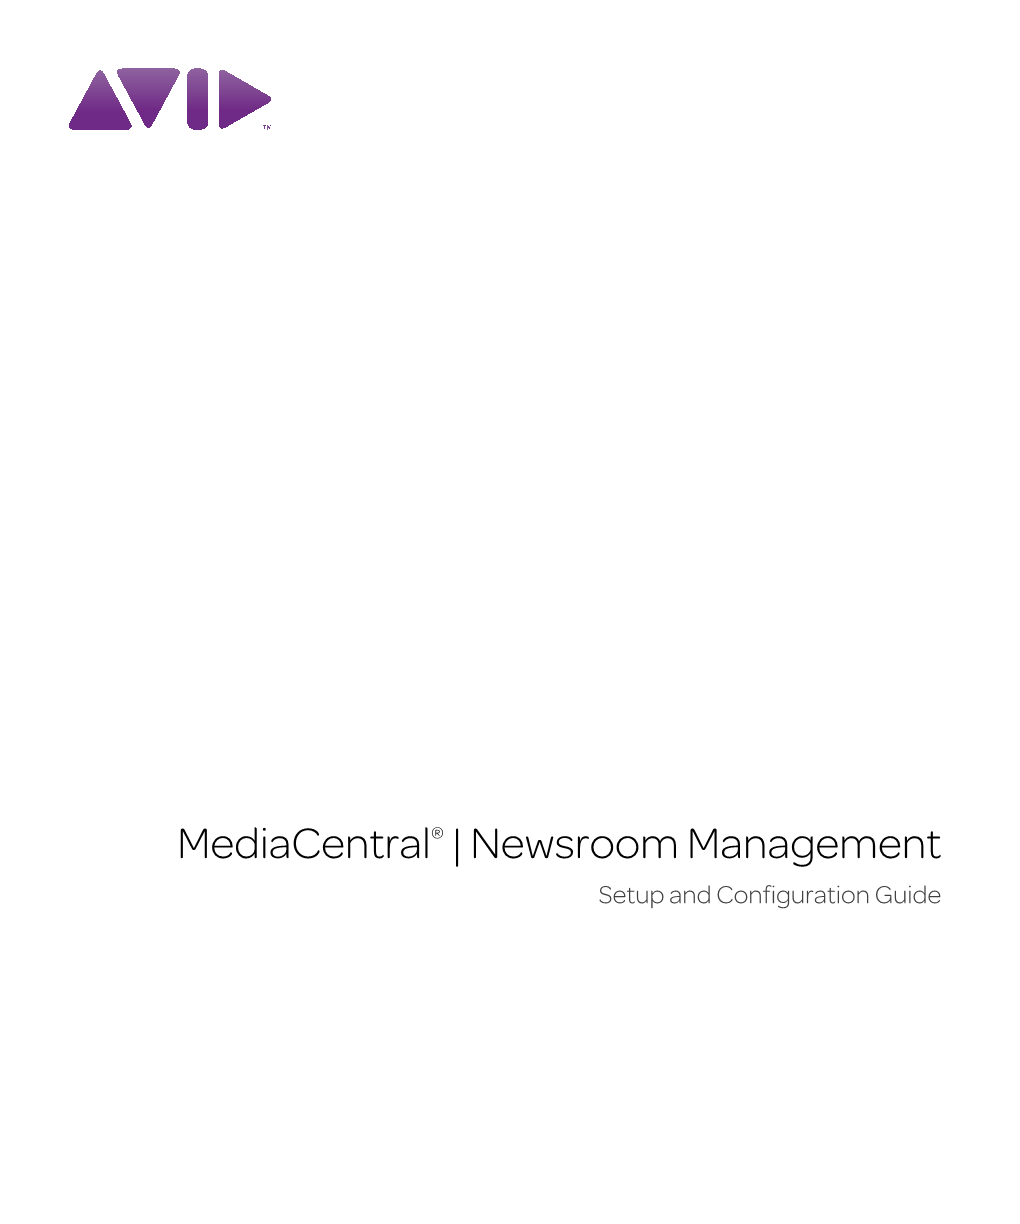 Mediacentral® | Newsroom Management Setup and Configuration Guide